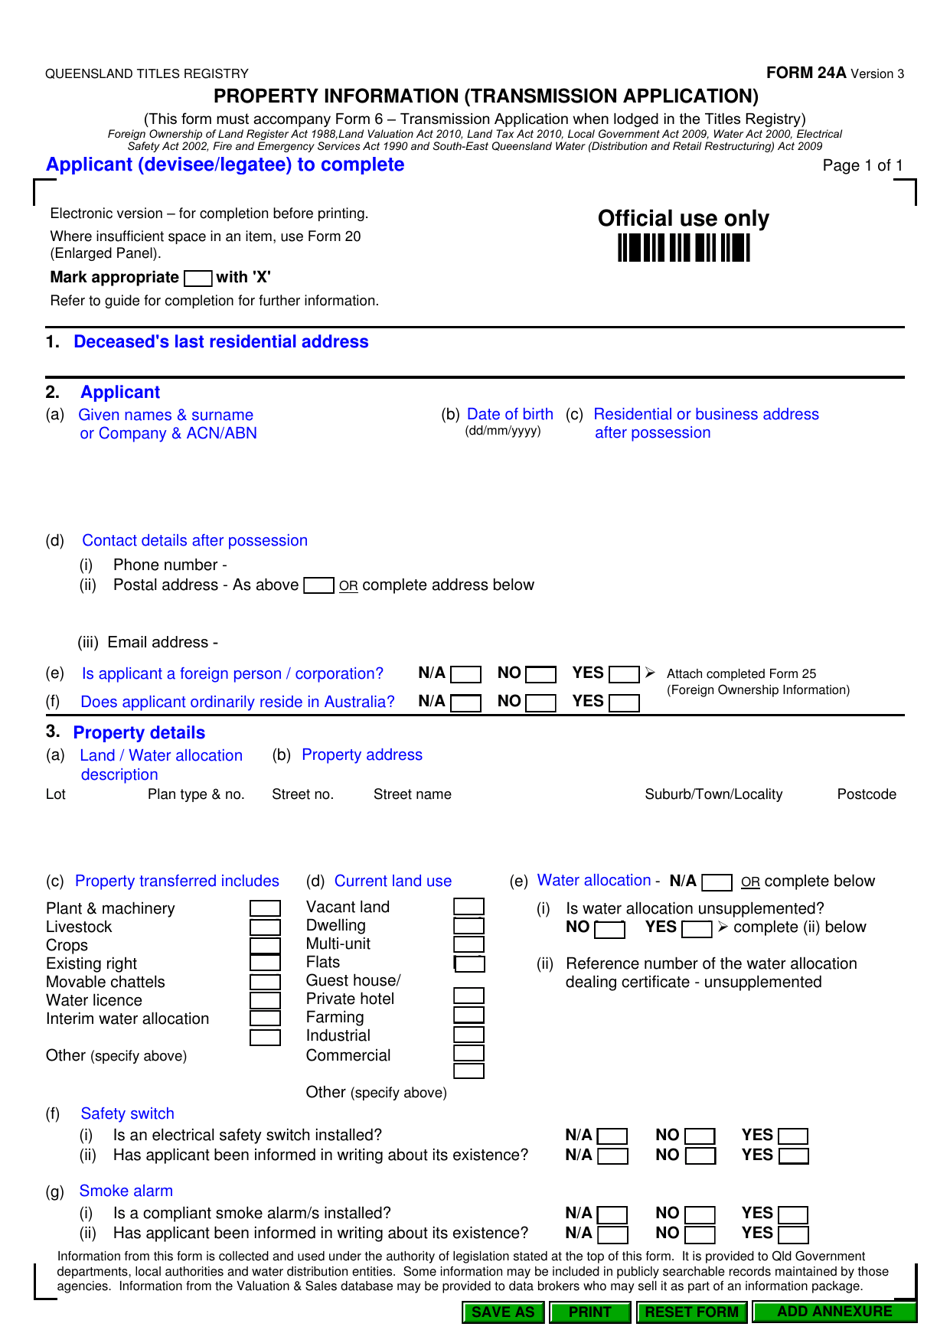 Form 24A Property Information (Transmission Application) - Queensland, Australia, Page 1